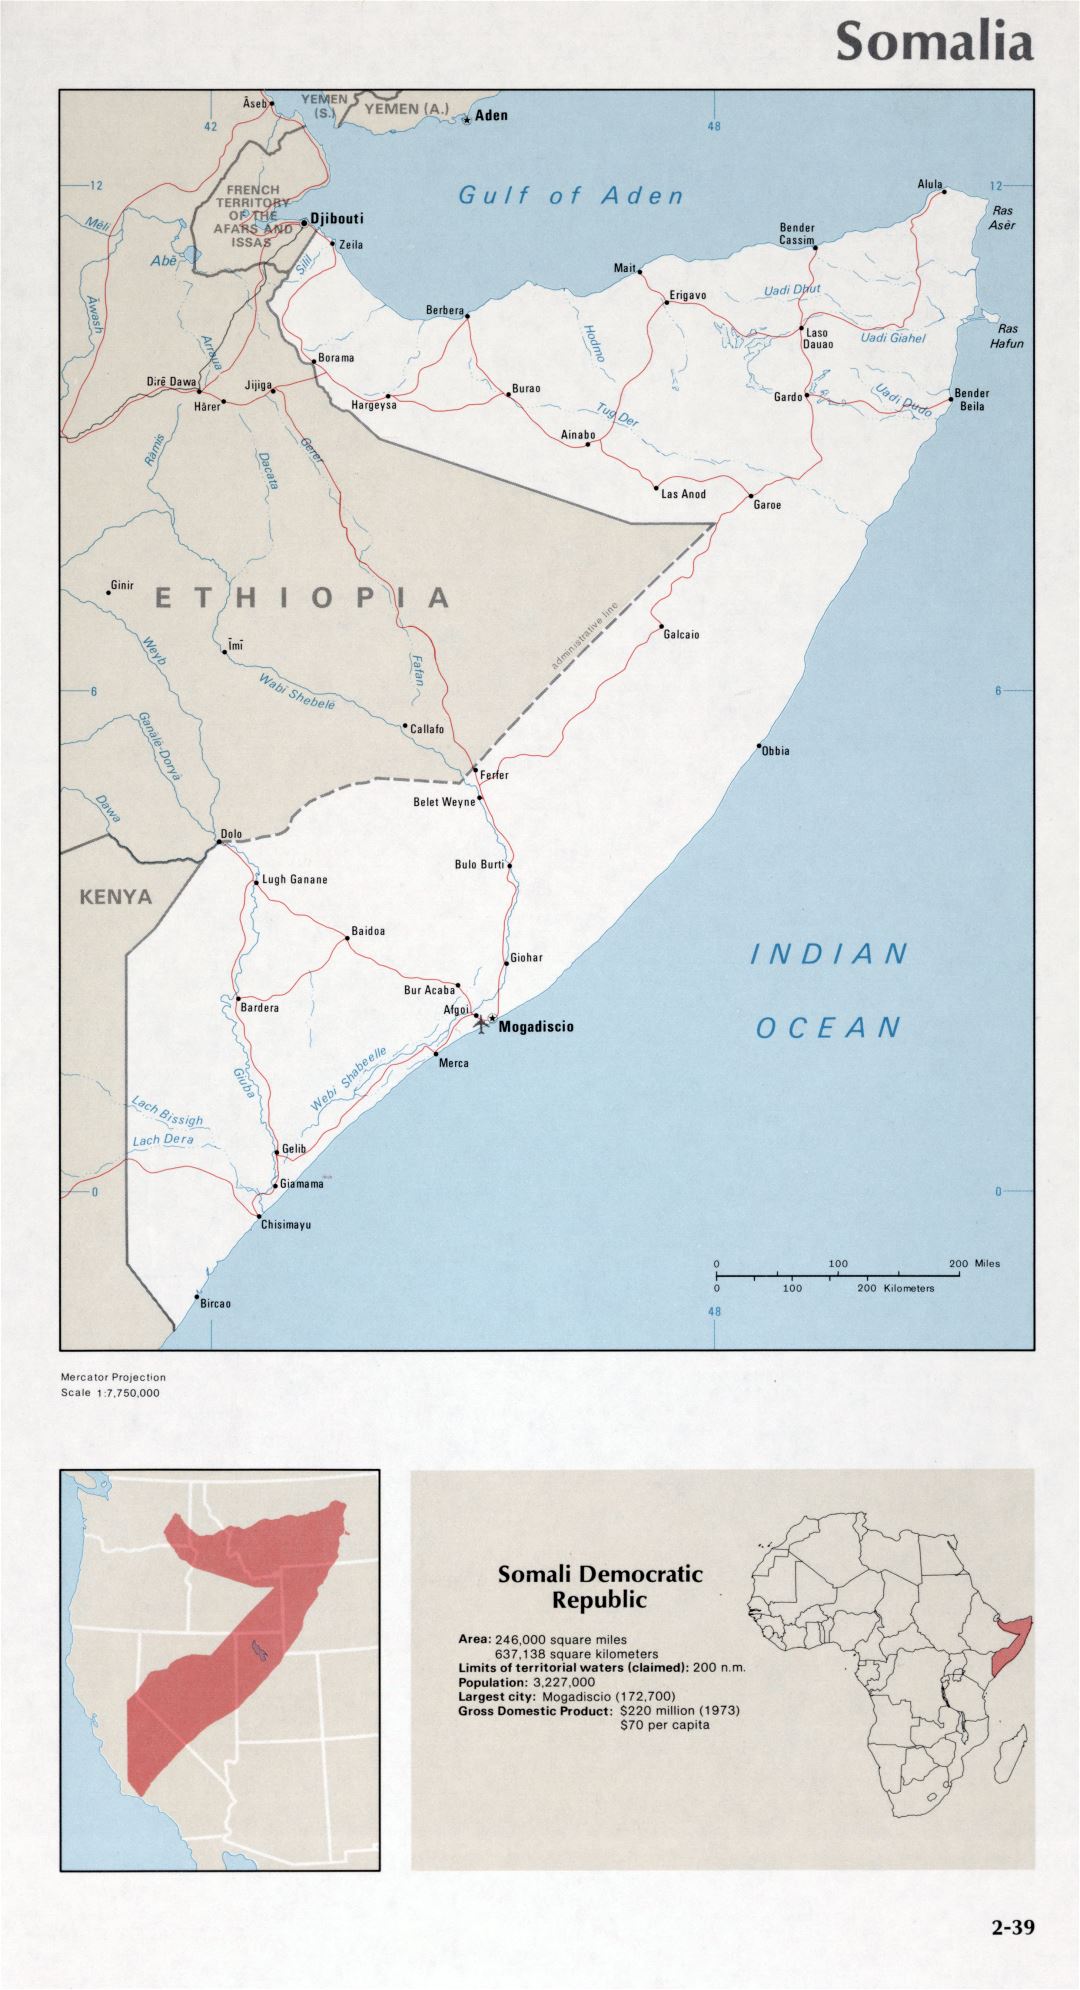 Map of Somalia (2-39)